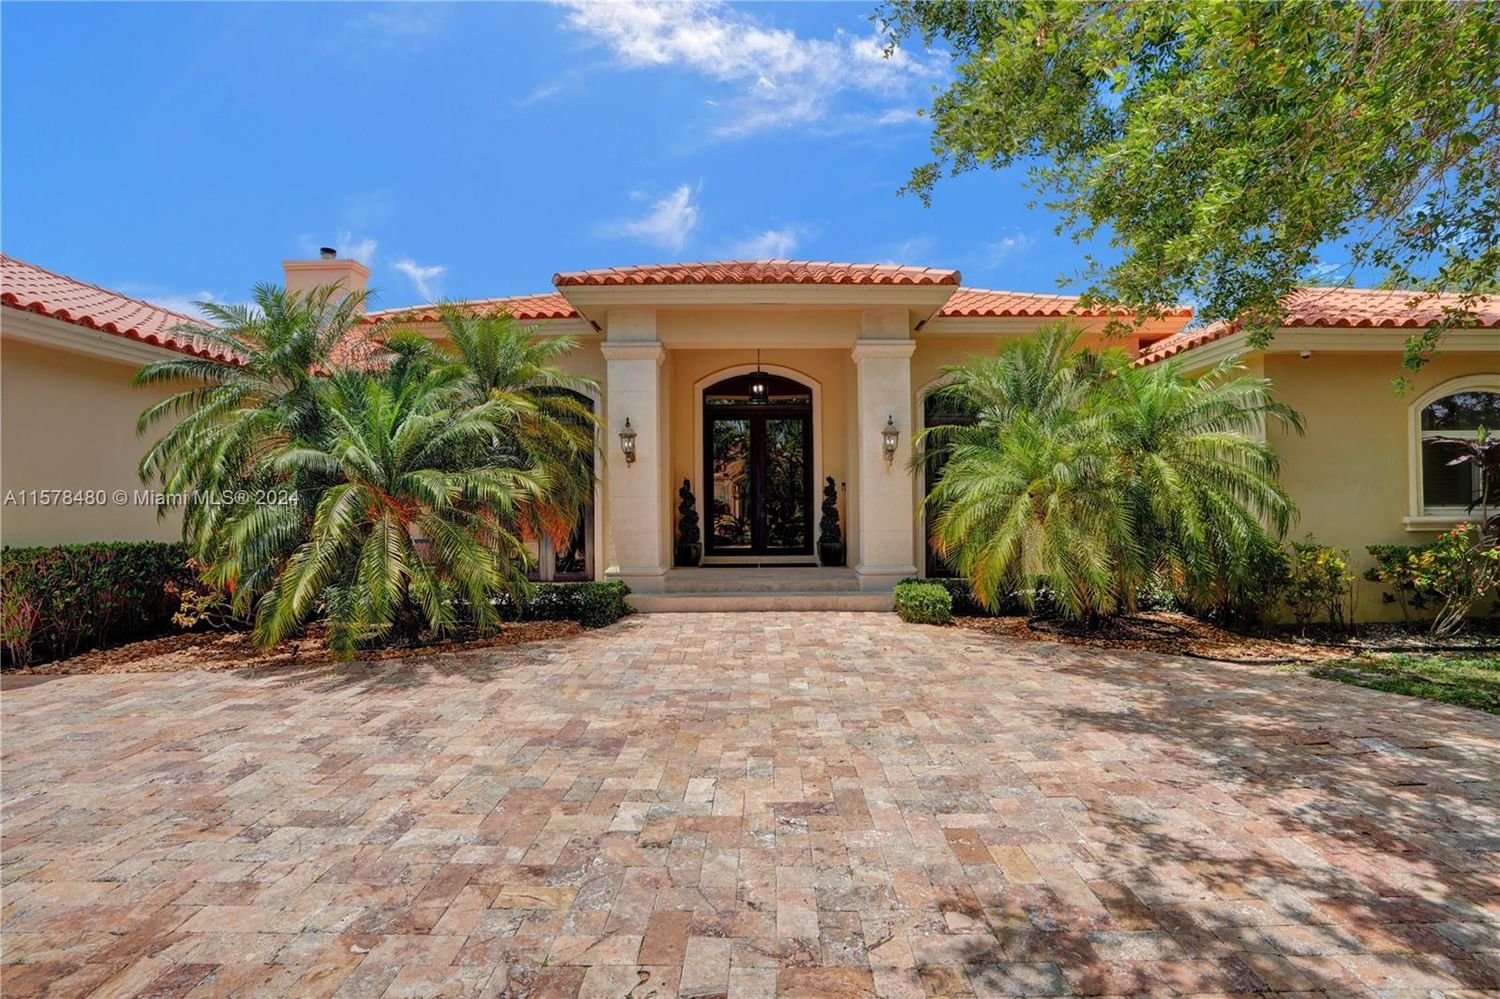 Real estate property located at 15210 74th Ct, Miami-Dade County, Coral Cay, Palmetto Bay, FL